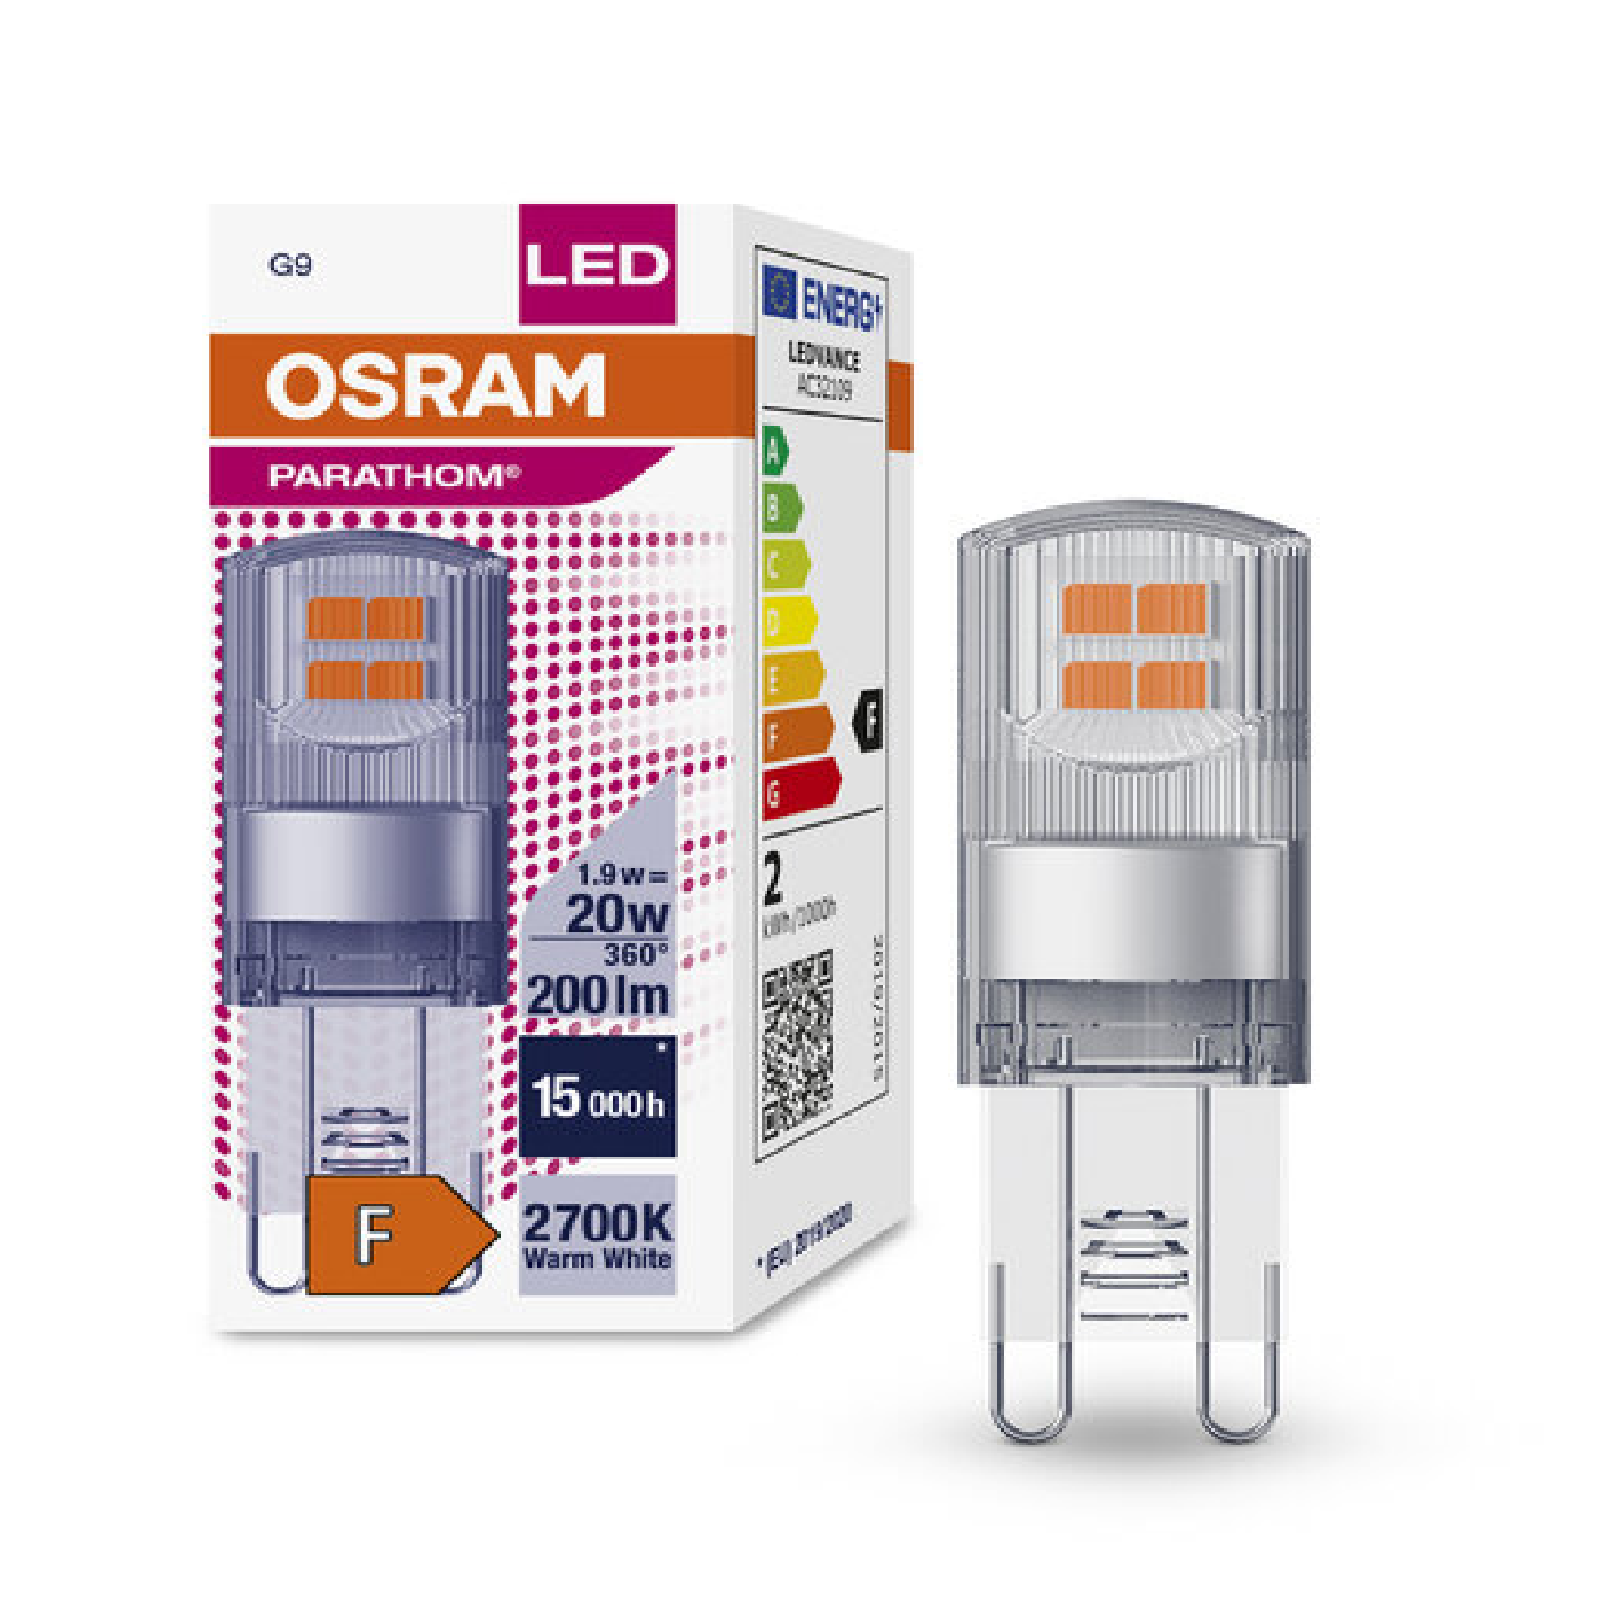 Osram Parathom G9 1.9W LED Capsule 20W 220-240V